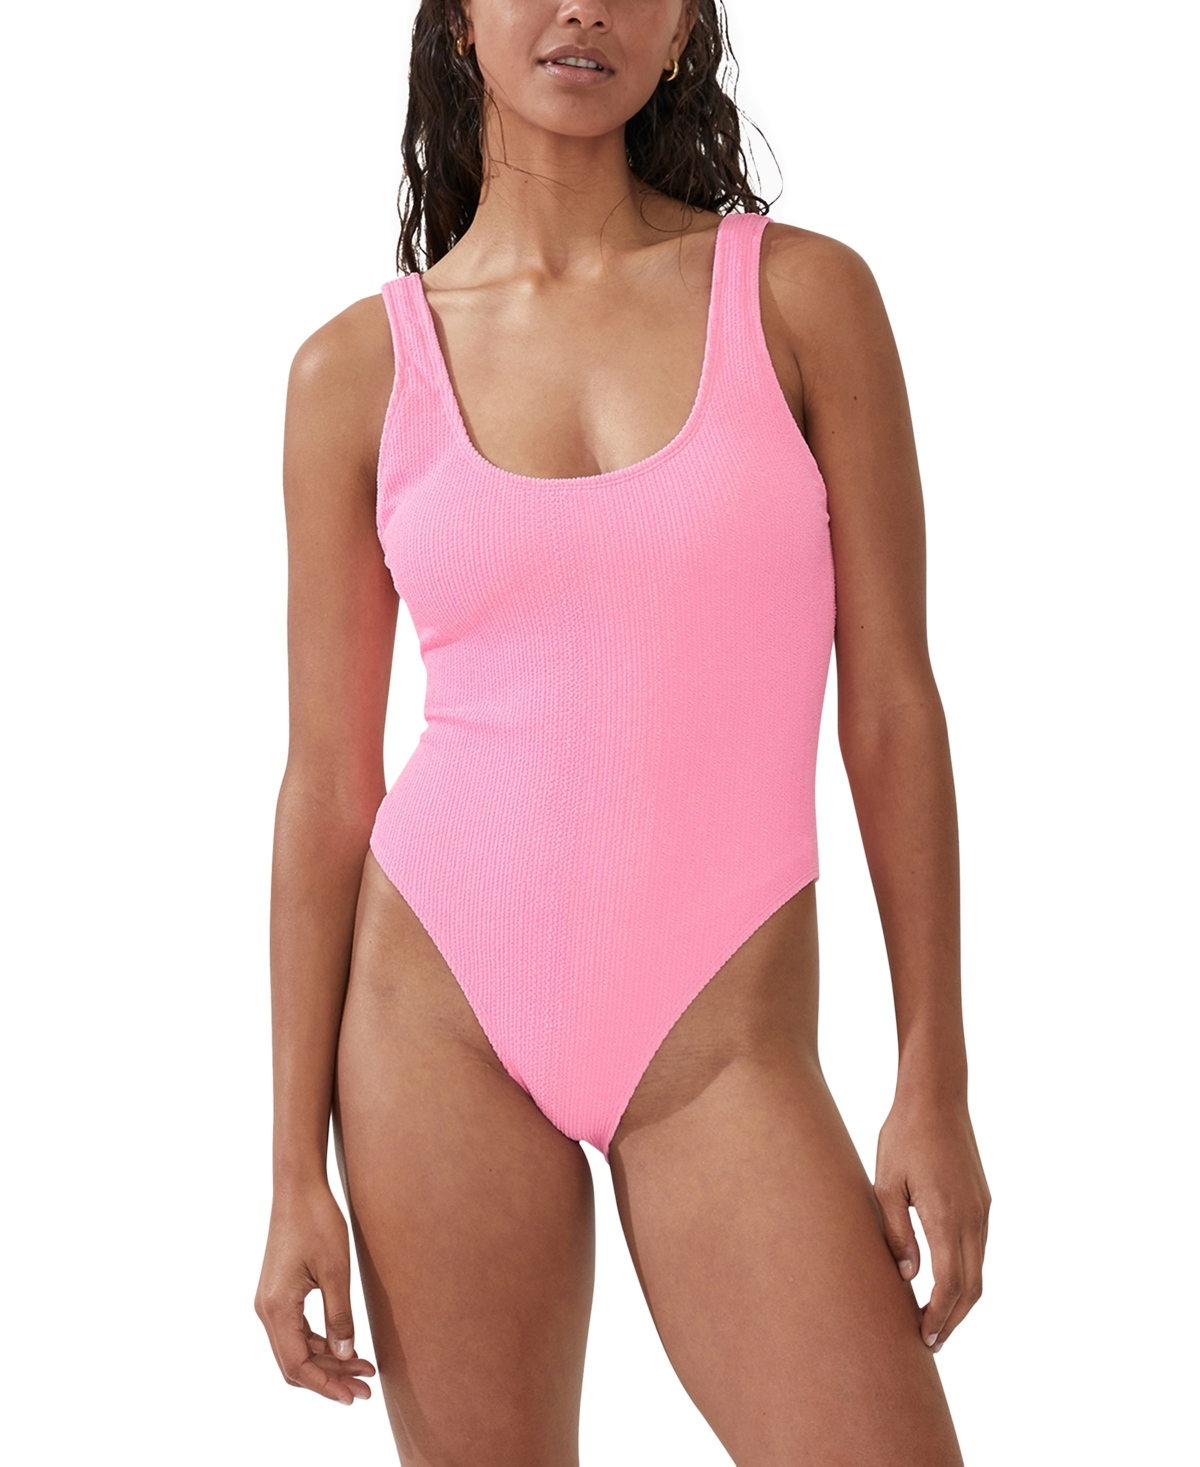 Cotton On Juniors' Low-back One-piece Swimsuit Women's Swimsuit In Malibu Pink Crinkle